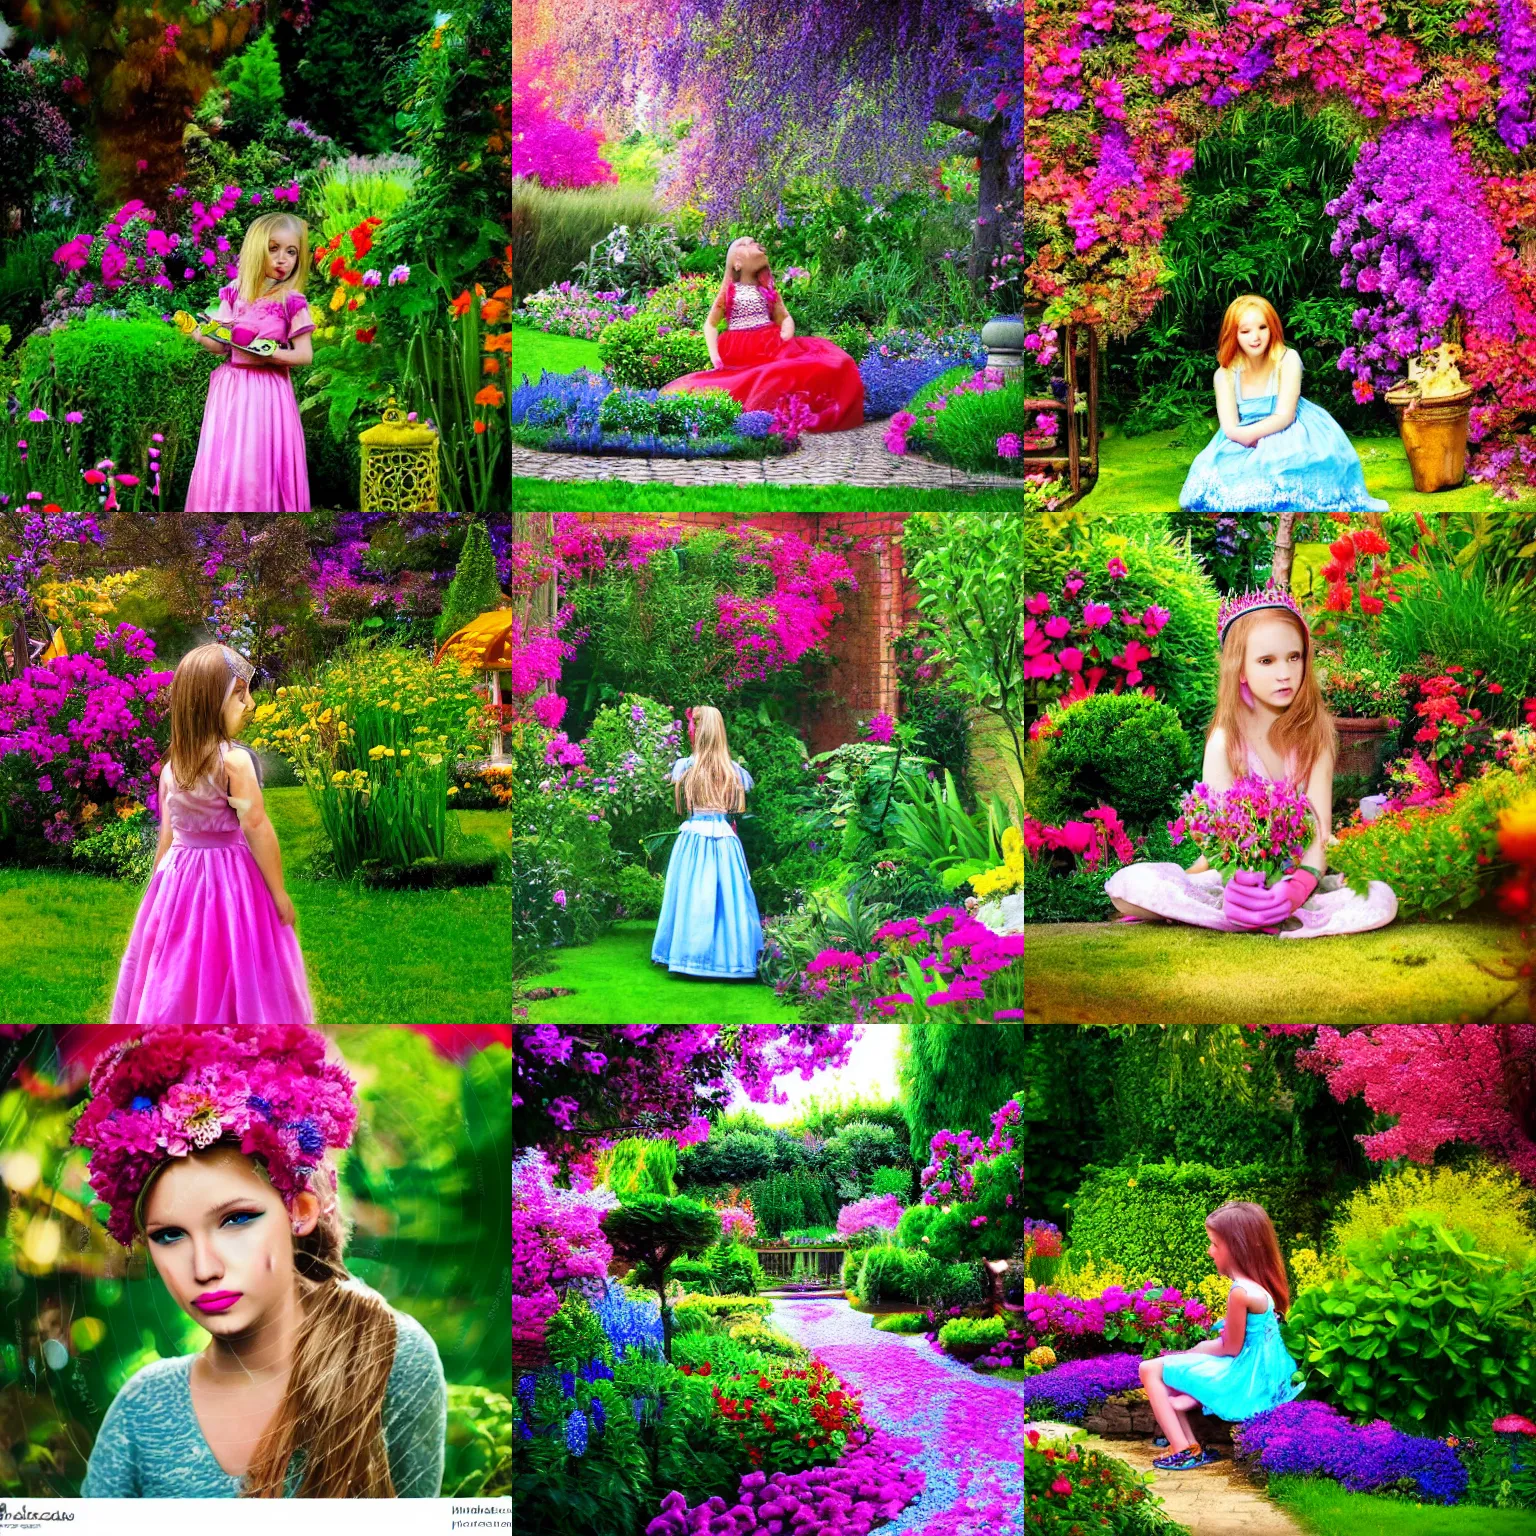 Prompt: kind princess, garden, atmosphere, vibrant, colorful